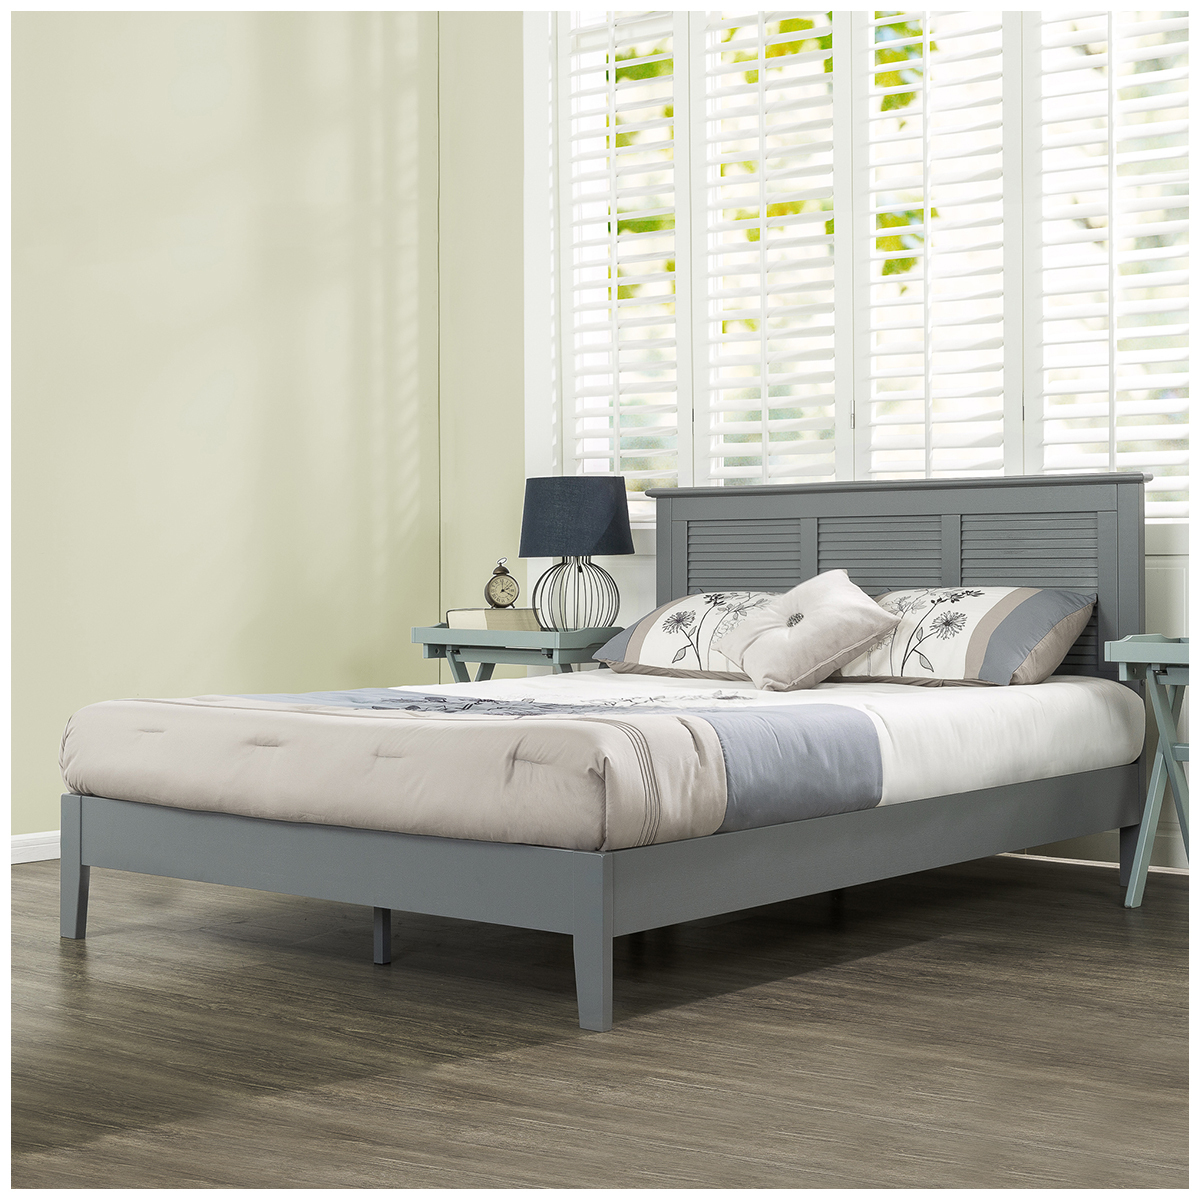 Blackstone Wooden Bed Frame Single Grey, Blackstone Elite Kerrigan King Panel Bed Frame